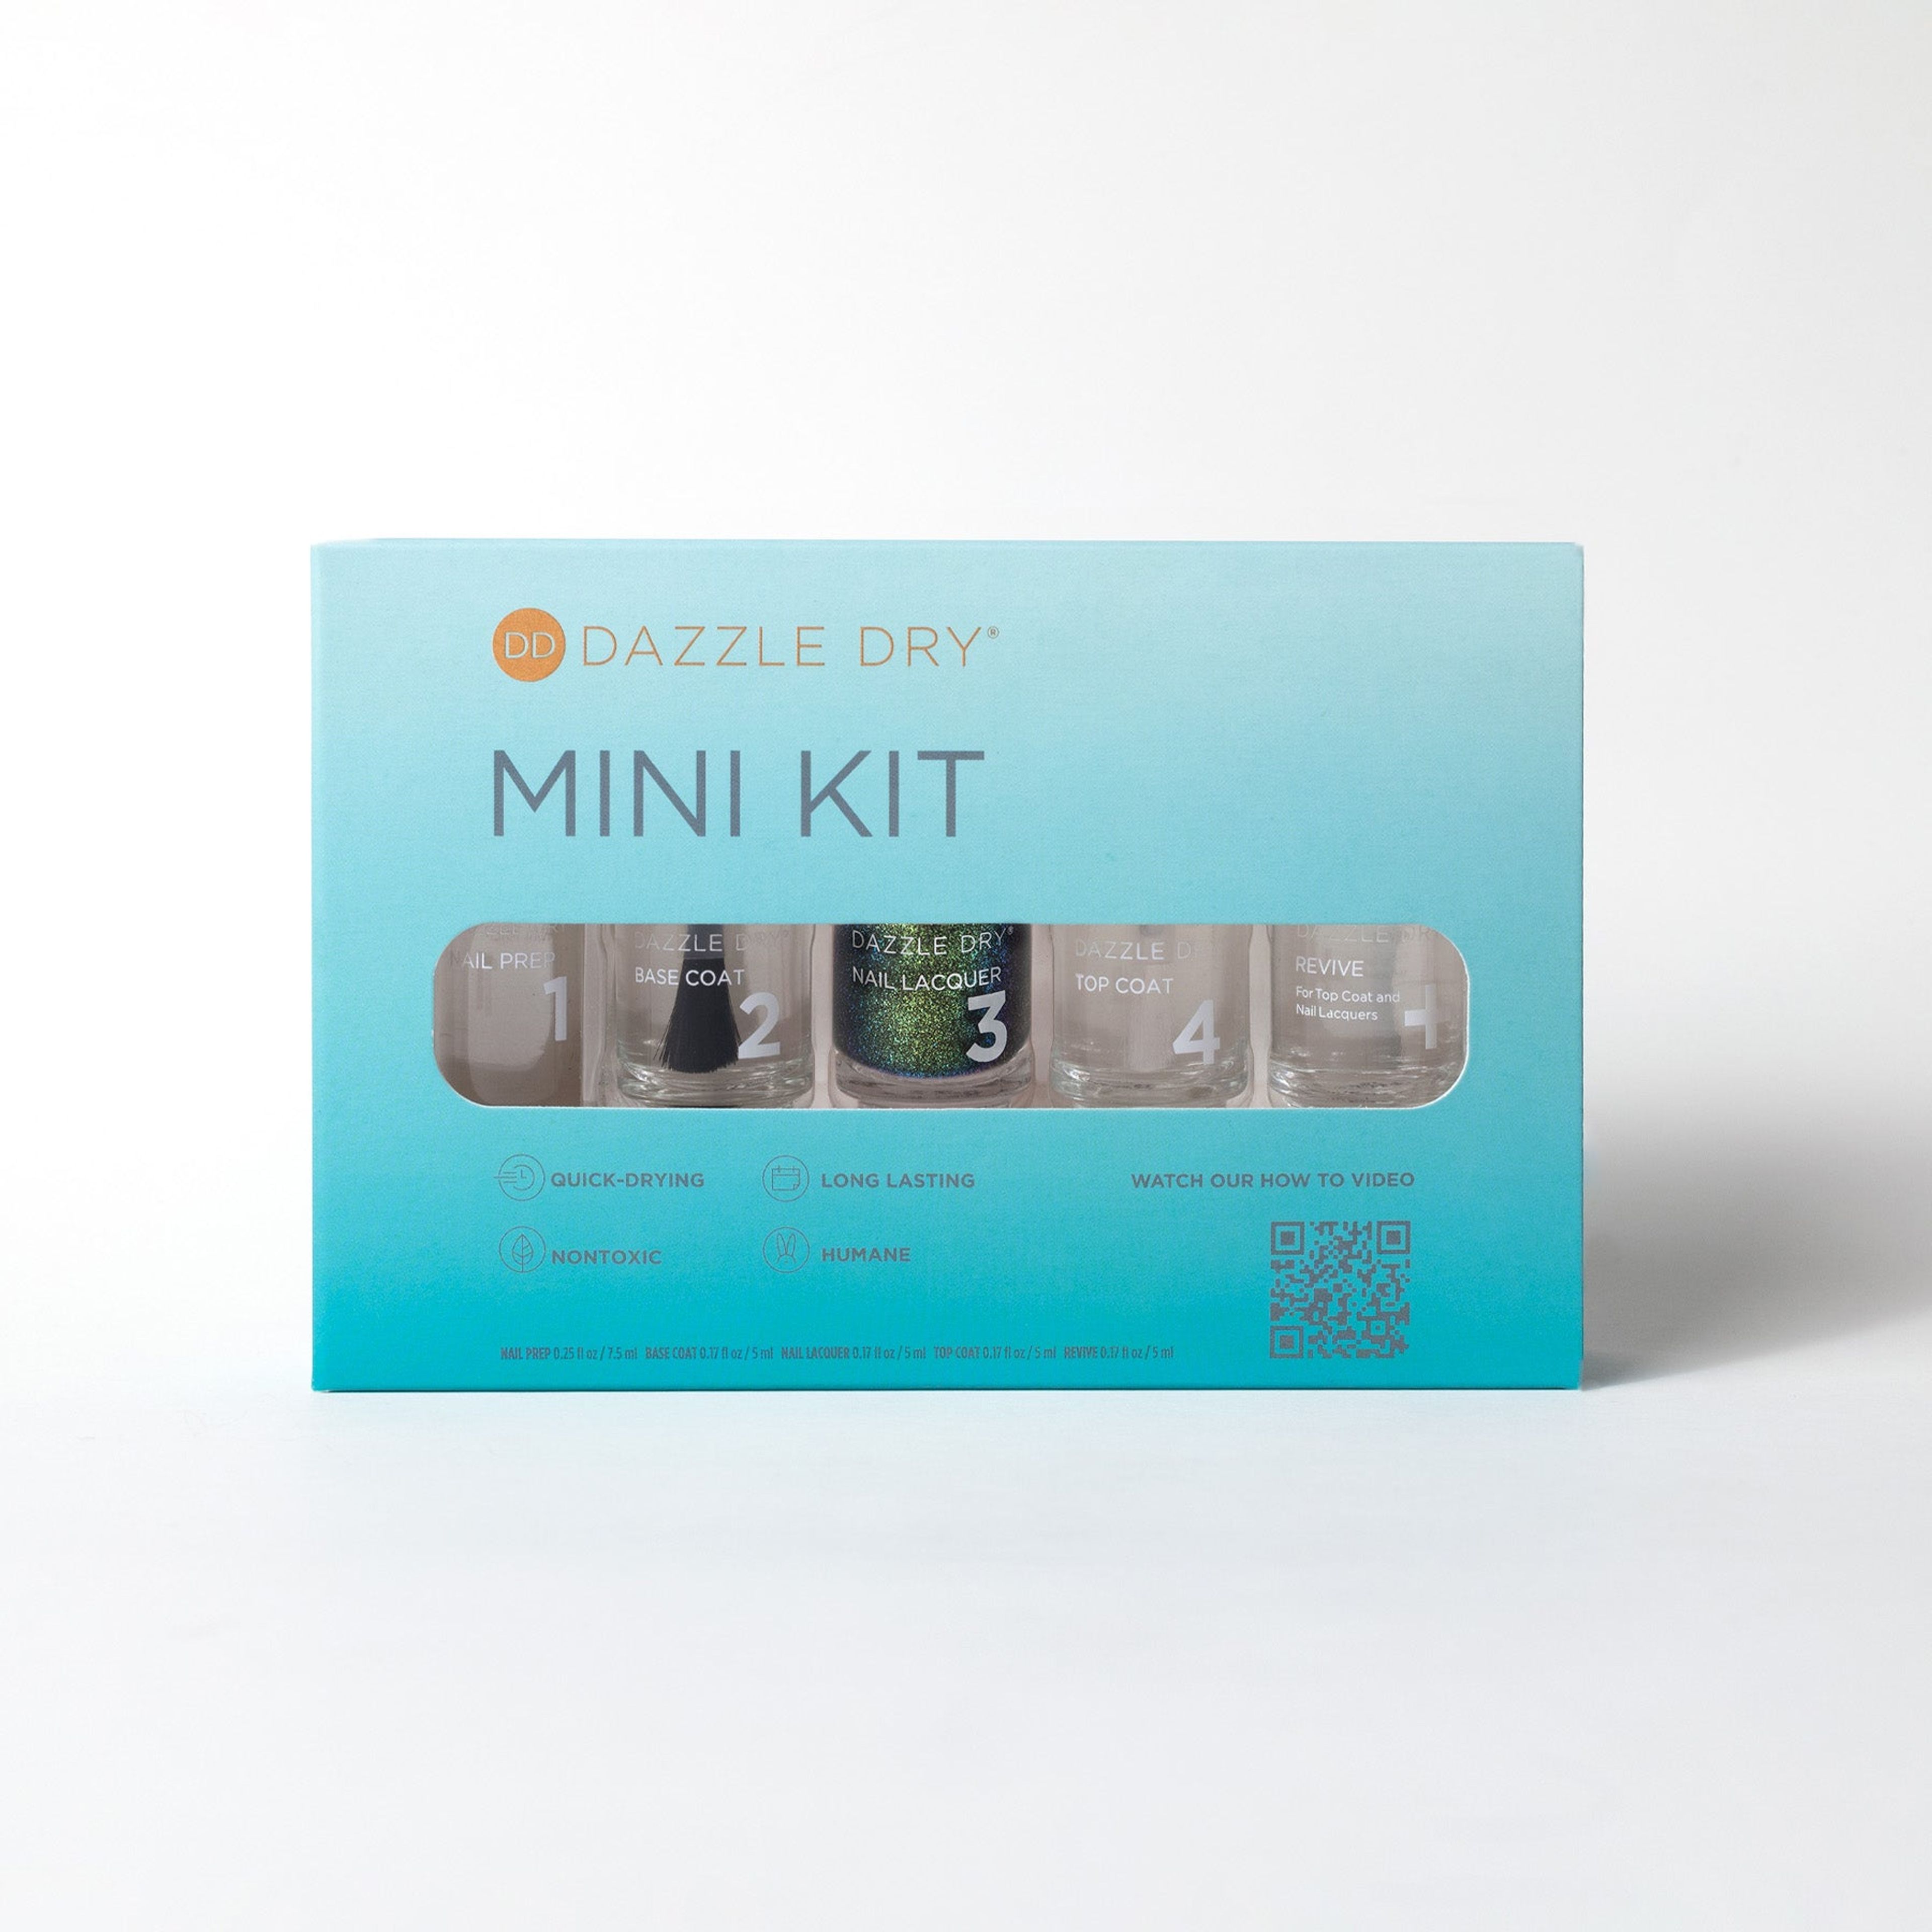 Pinch Provisions Glitter Bomb Minimergency Kit